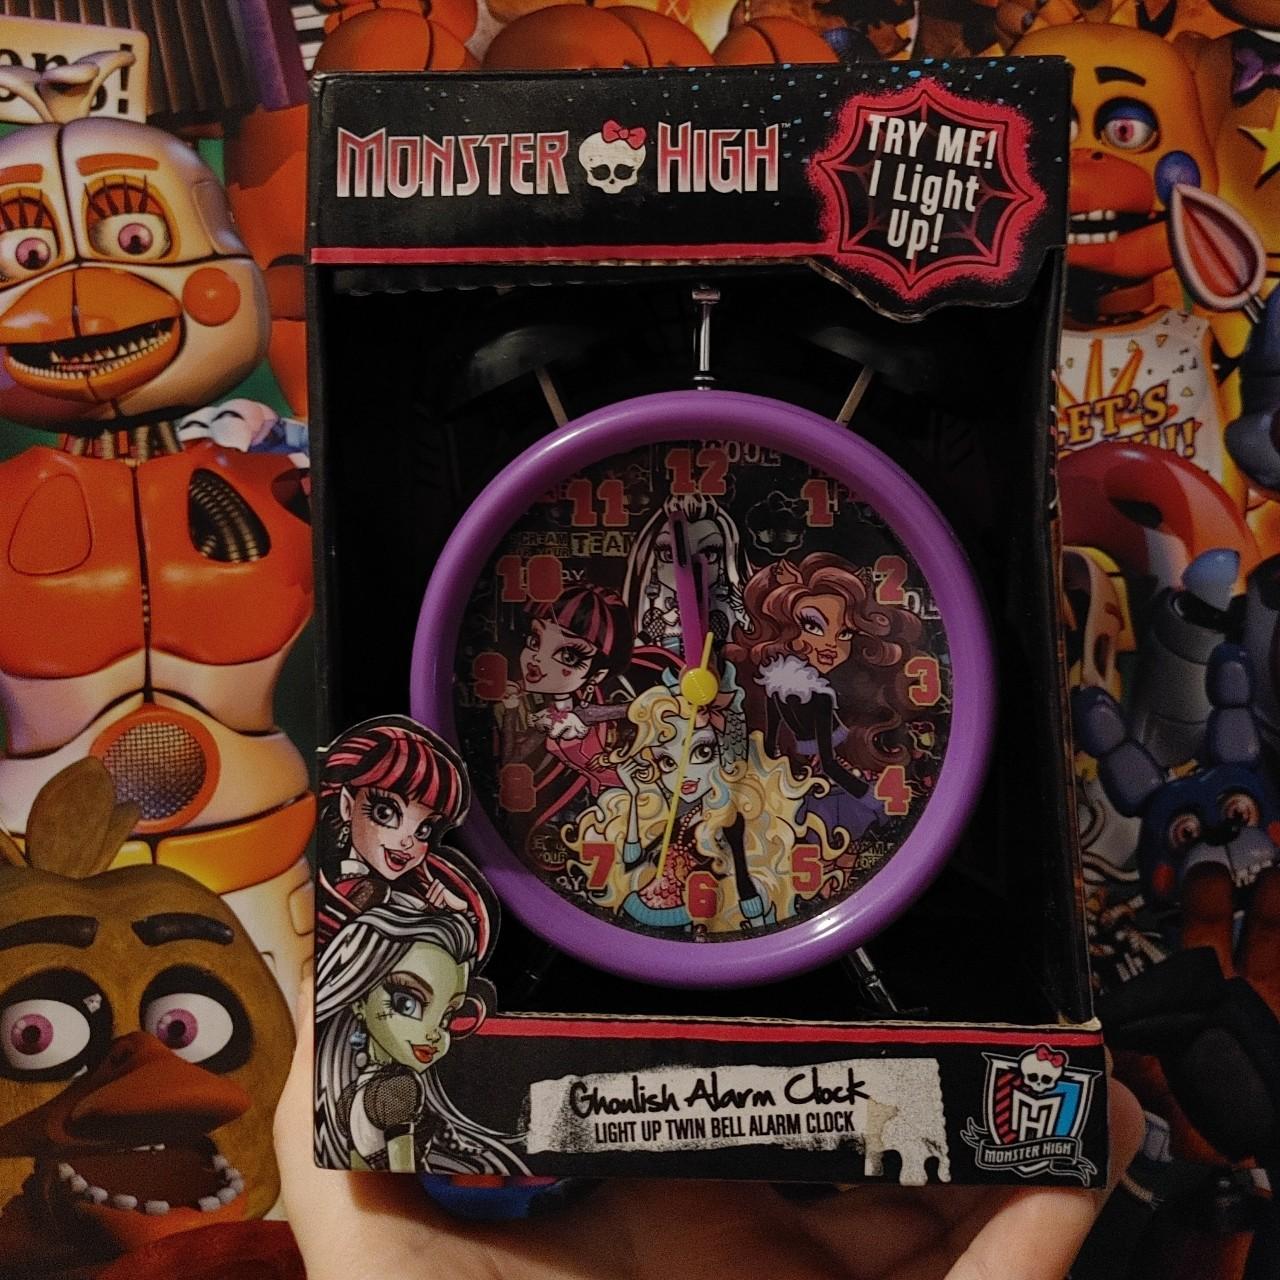 Monster High Frankie Stein Funko Pop Vinyl Figure - Depop